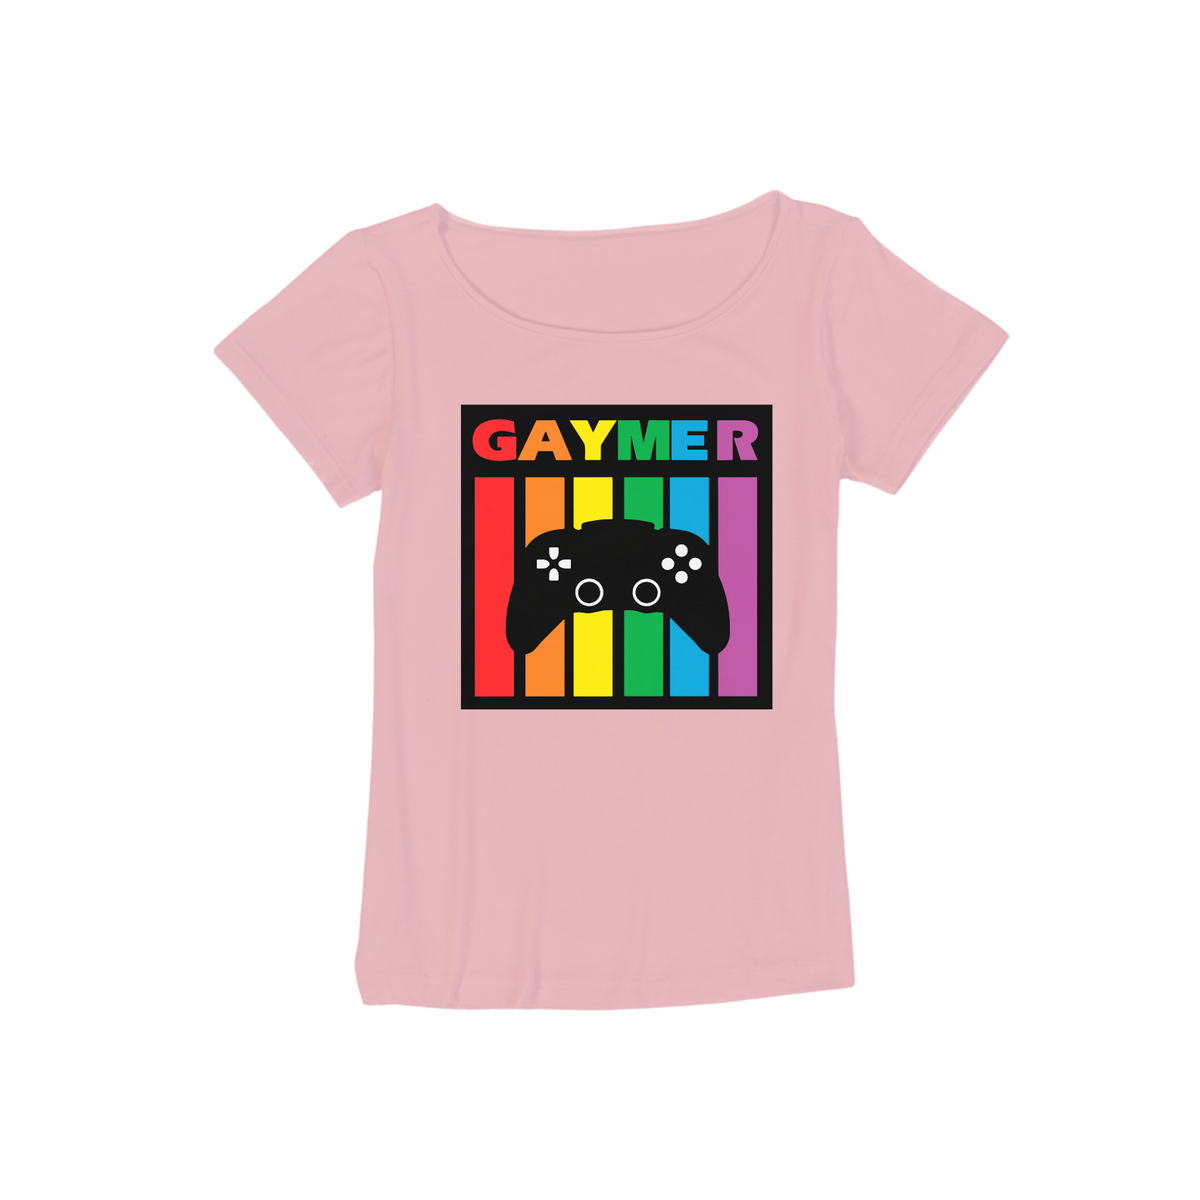 Nome do produto: Lycra Gaymer (varias cores)